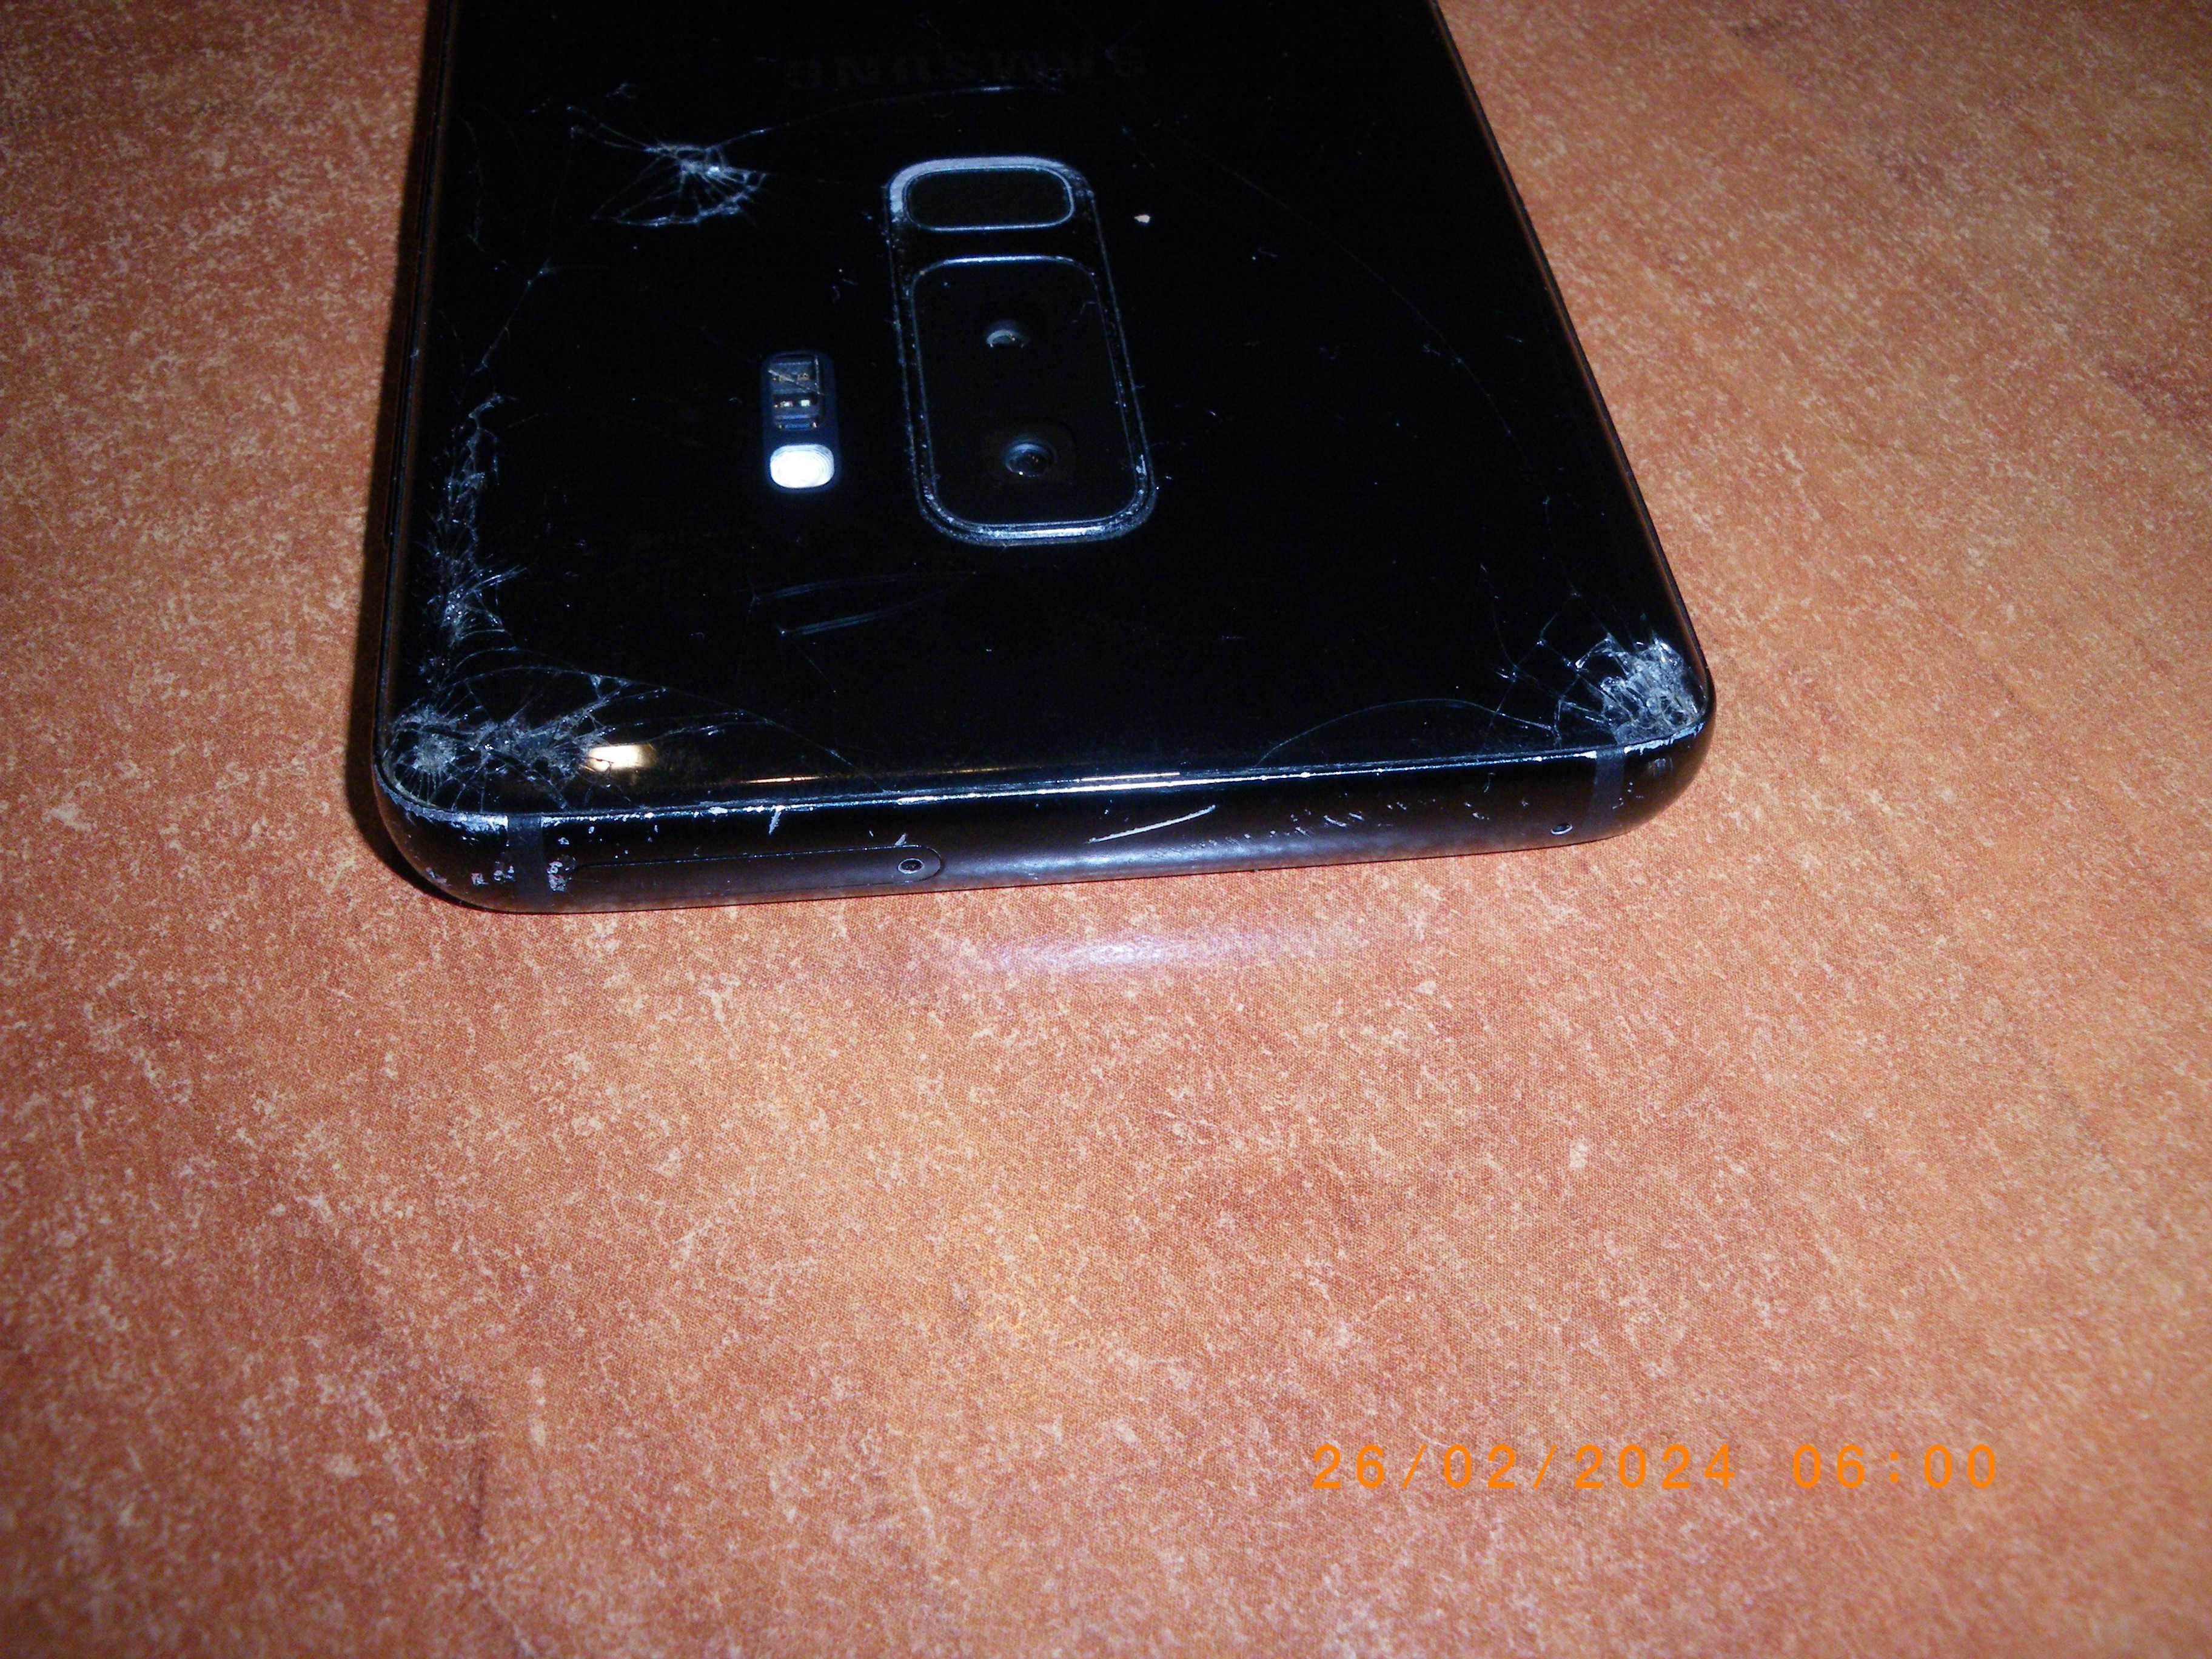 Telefon Samsung S9 plus